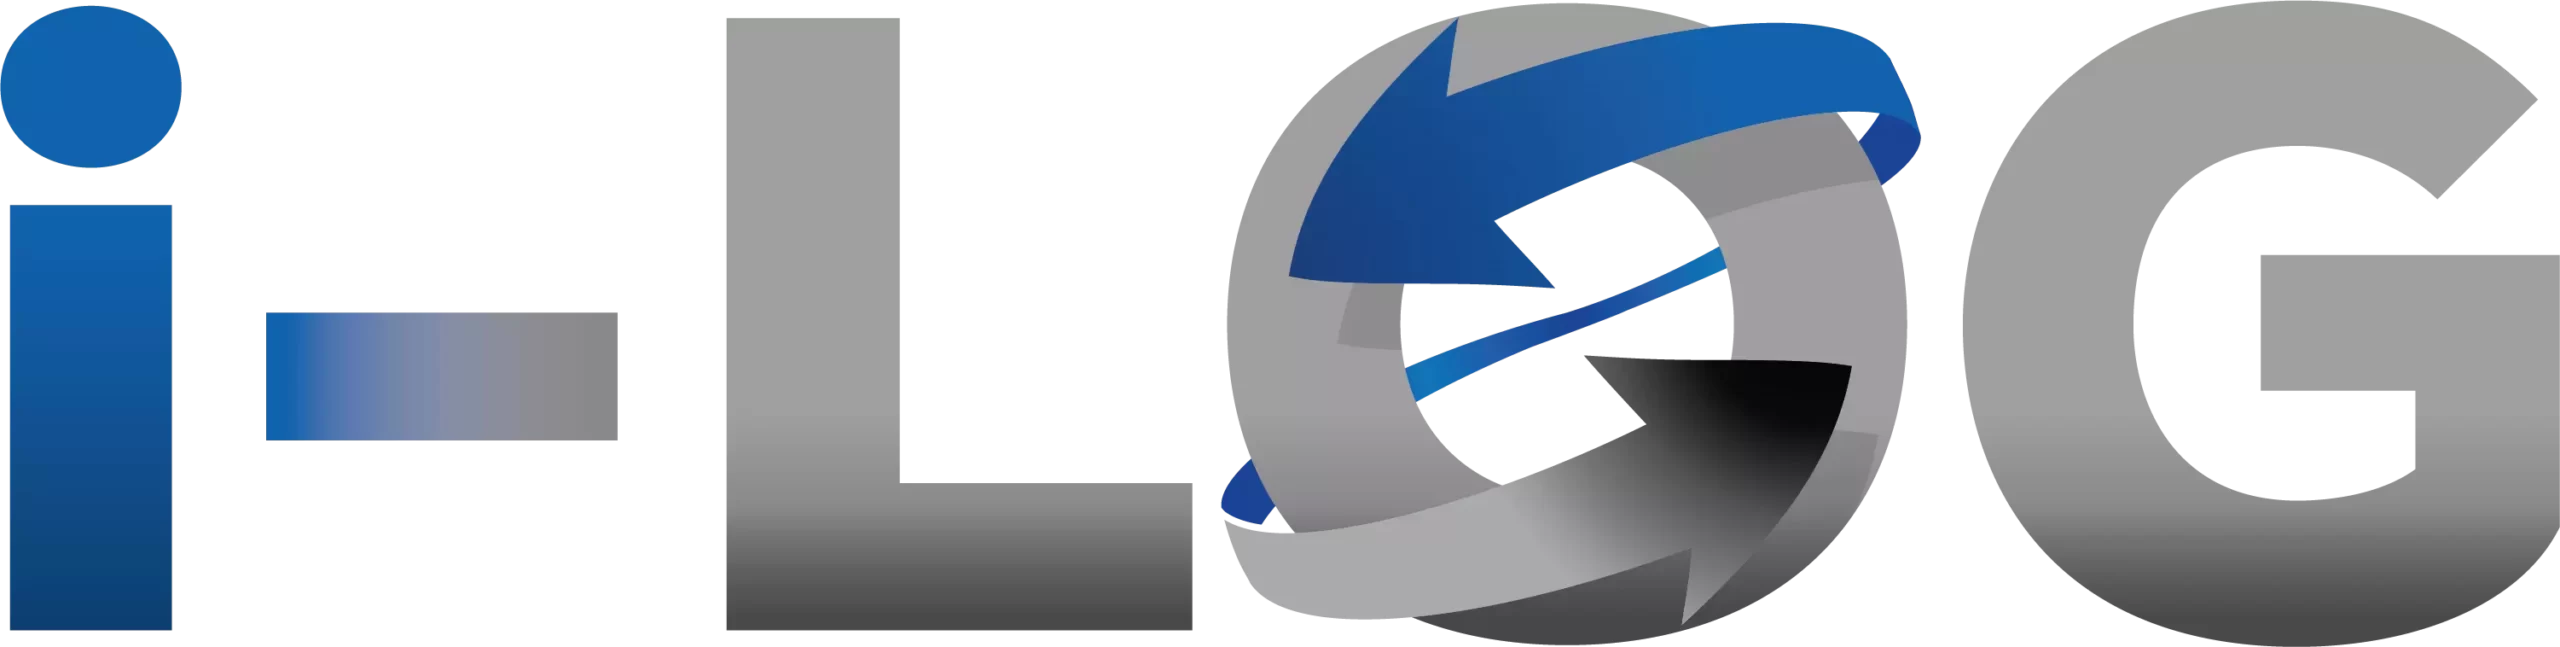 i-log data logger logo